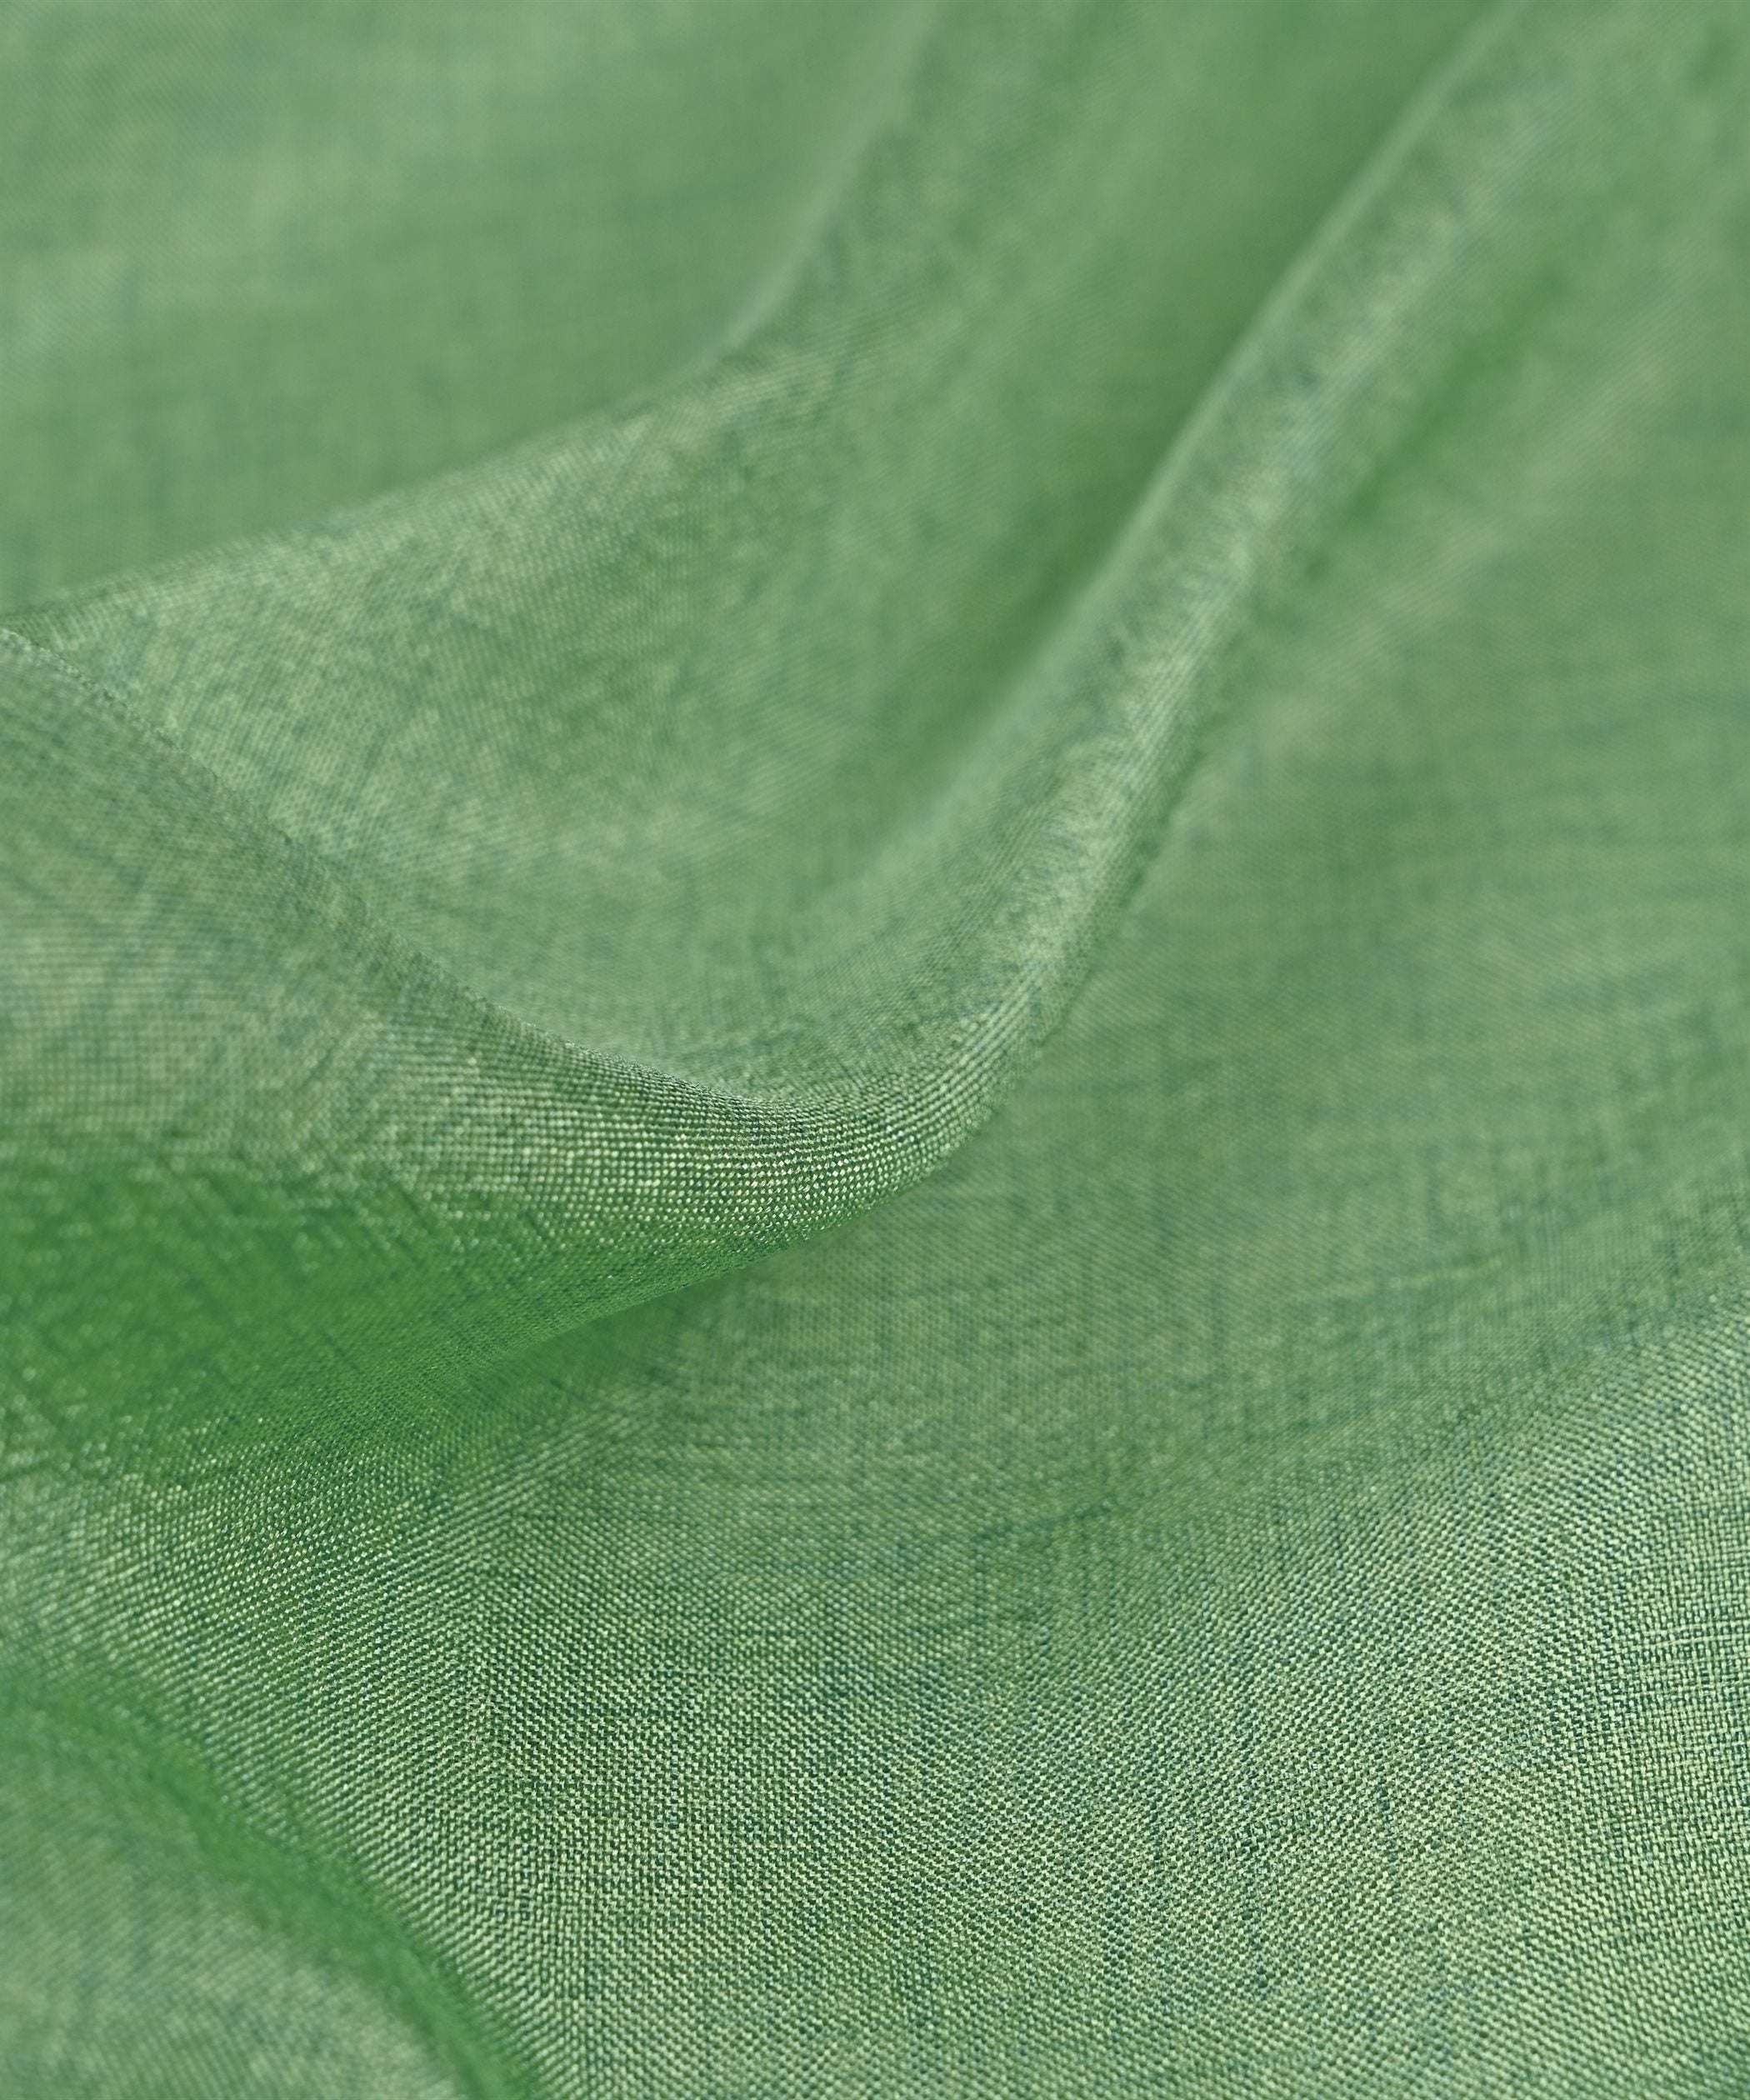 Olive Green Plain Dyed Manipuri Fabric